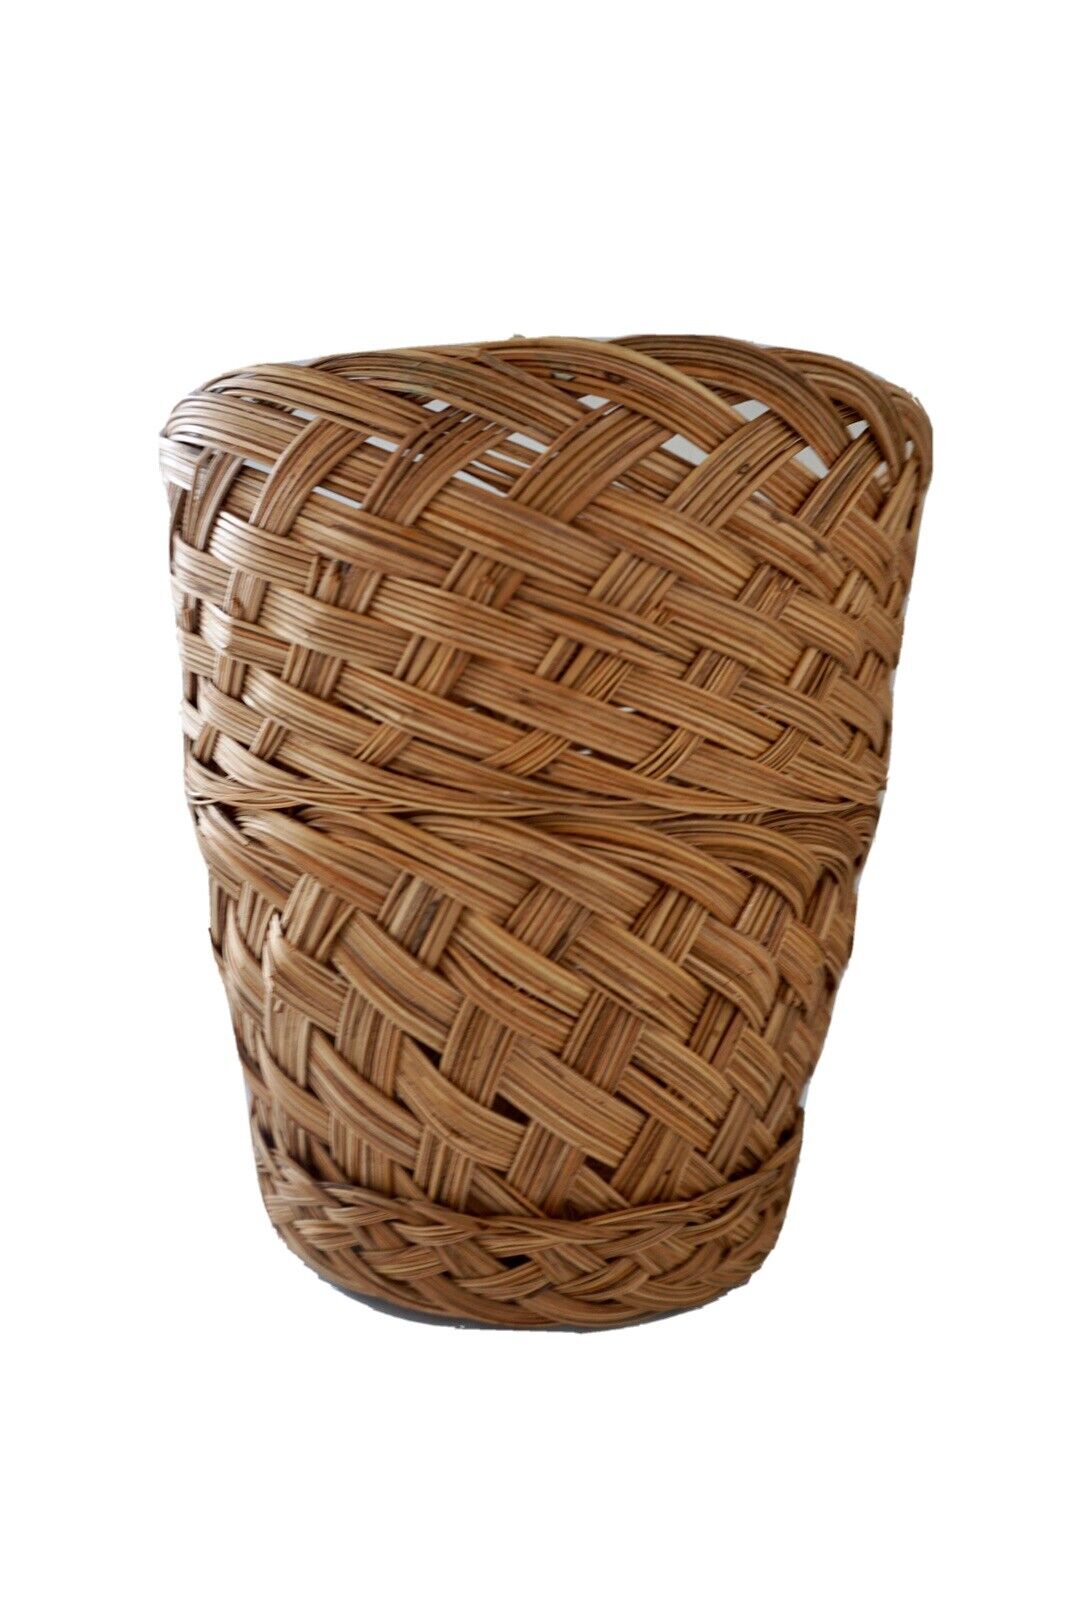 Vintage 60s Woven Wicker Planter Basket - Boho Jungalow Mid Century 10” Tall